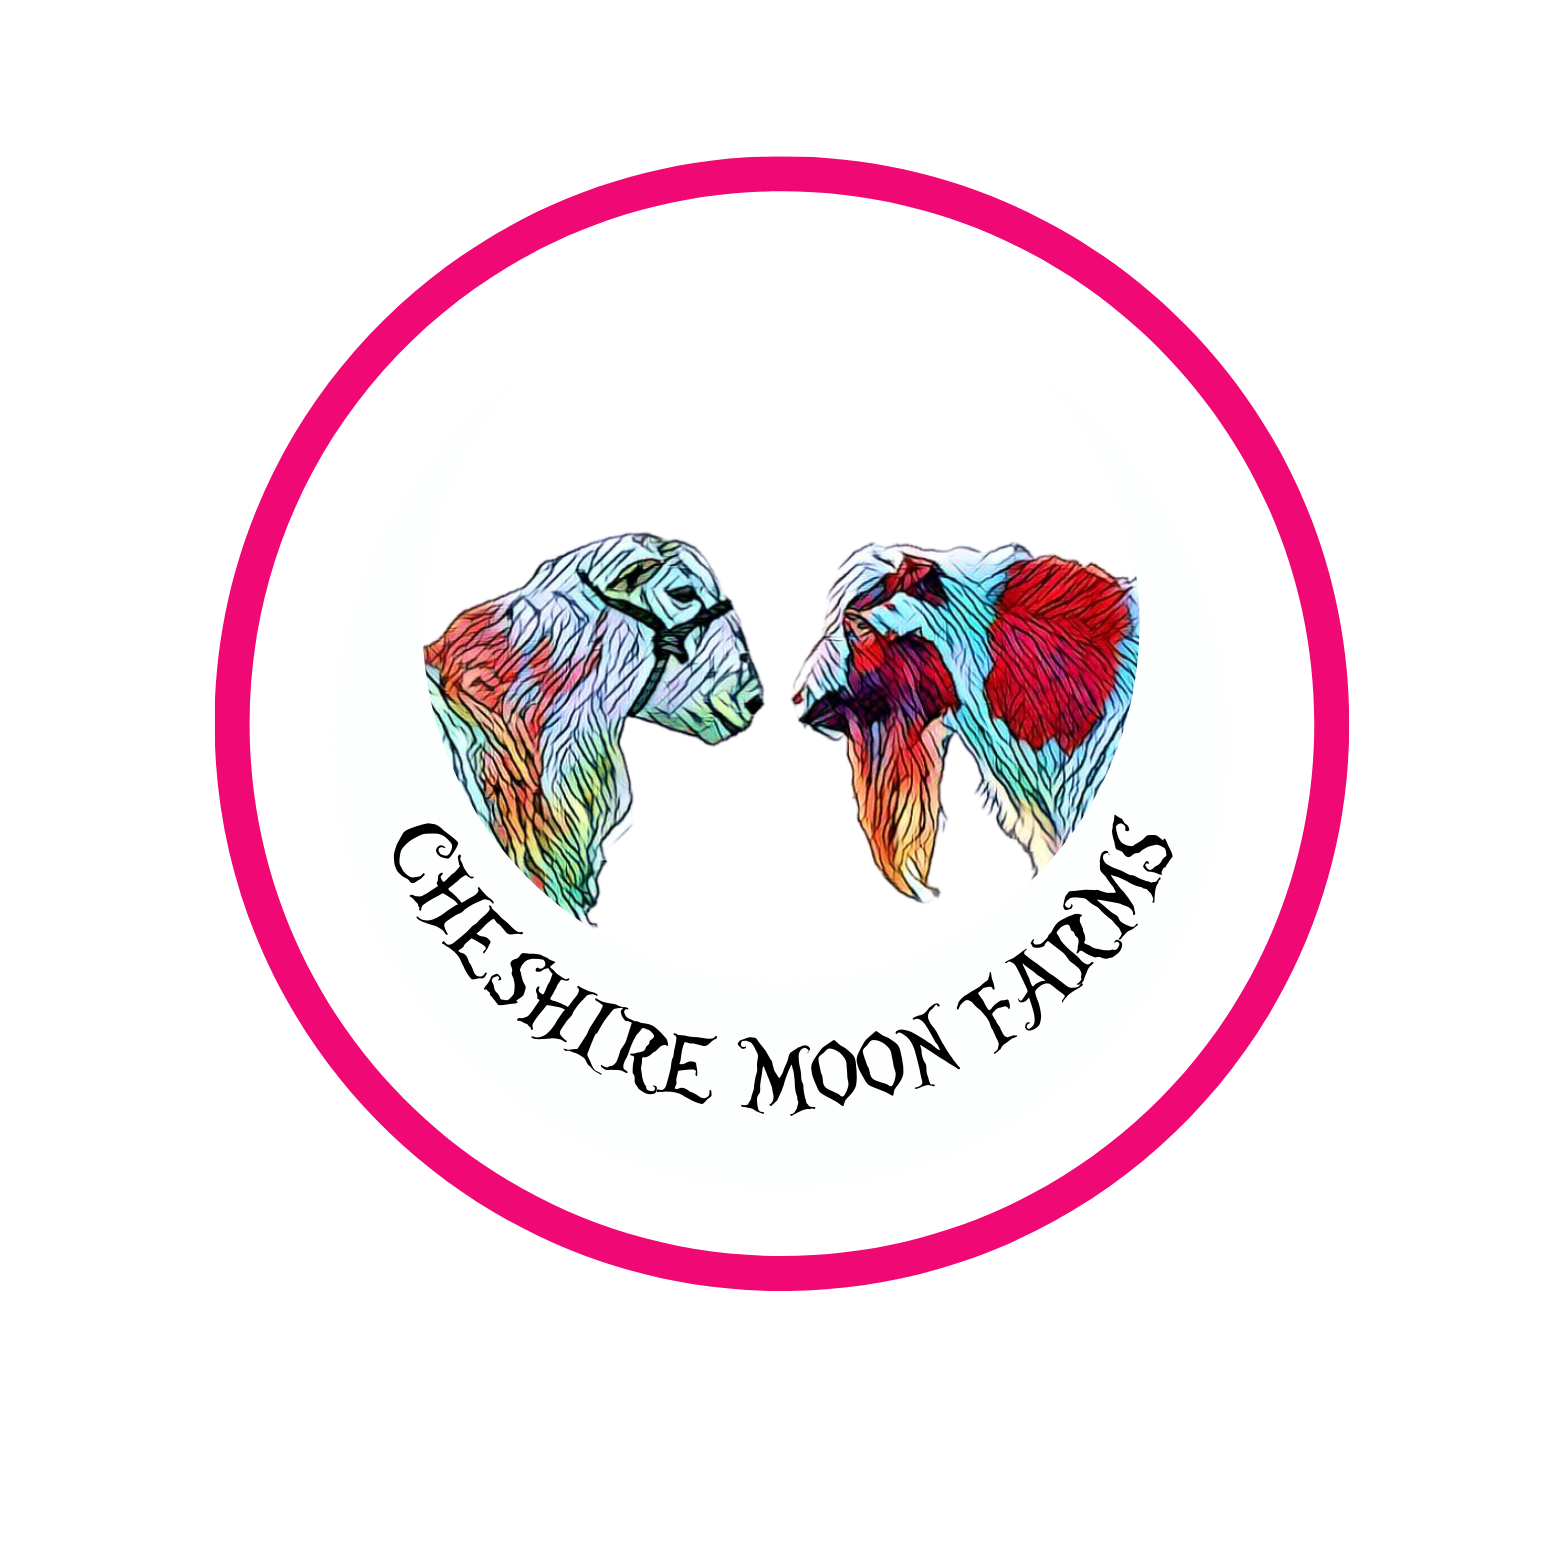 Cheshire Moon Farms